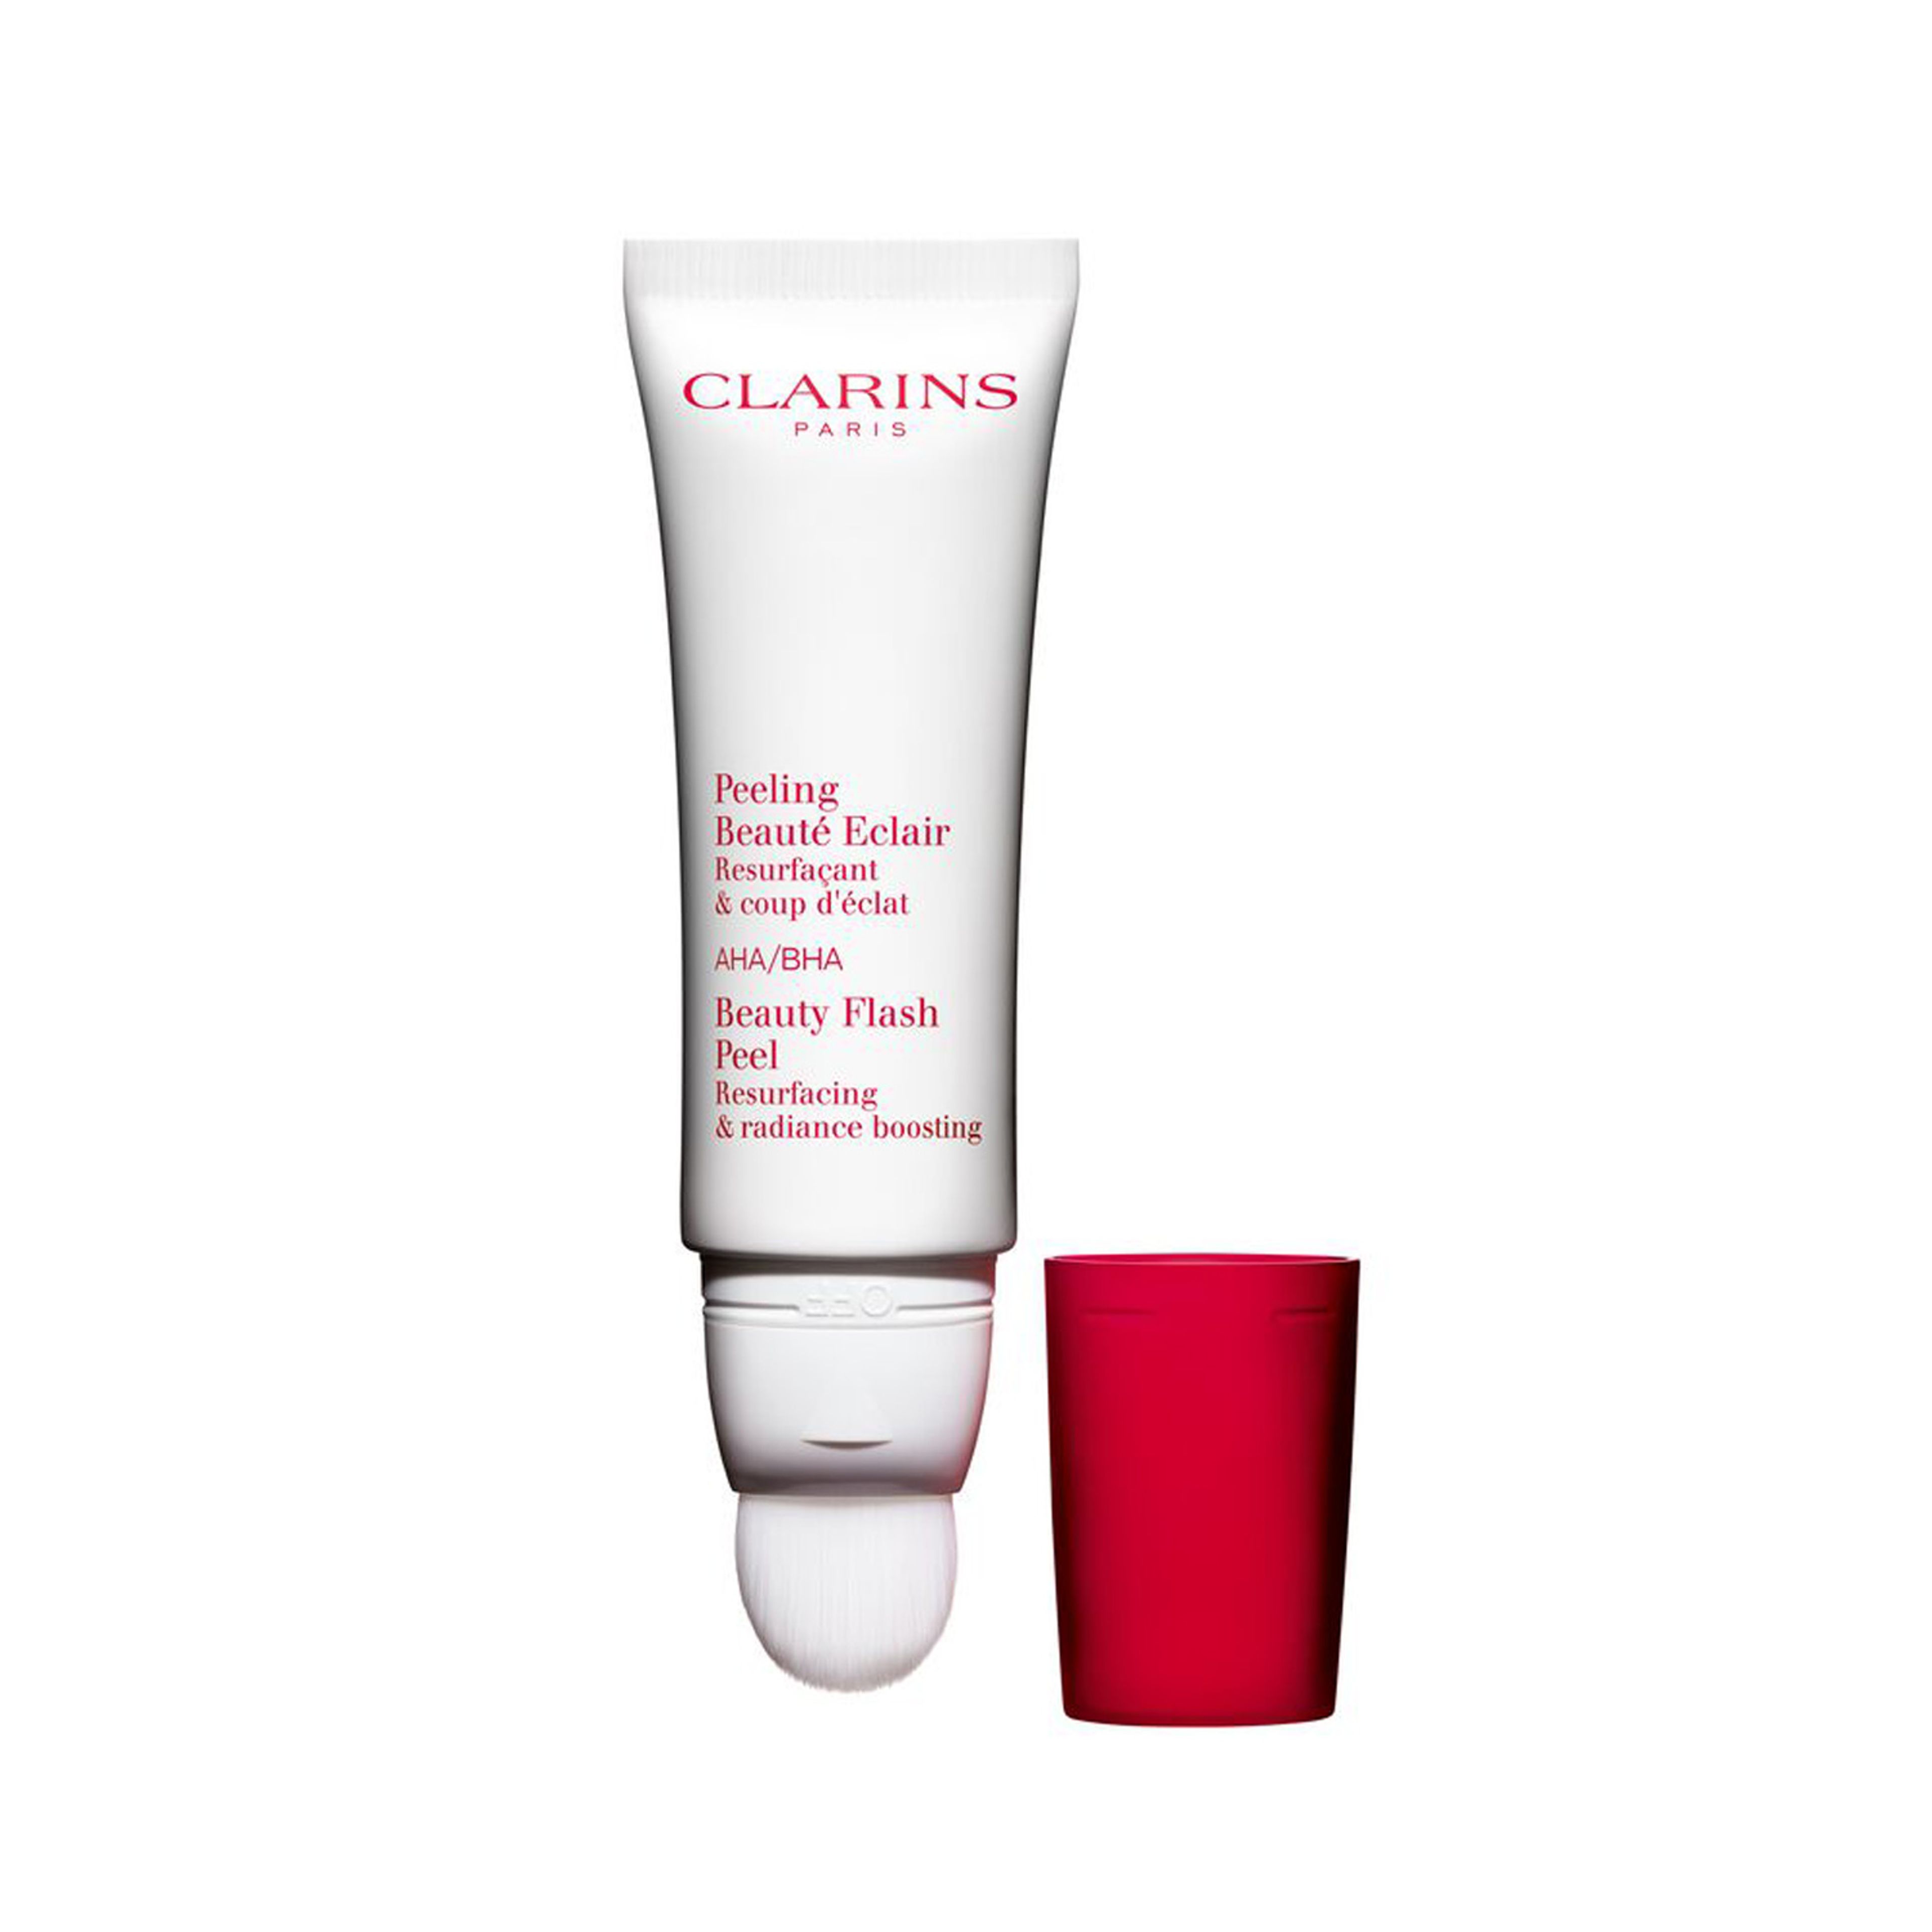 Clarins Beauty Flash Peel 1